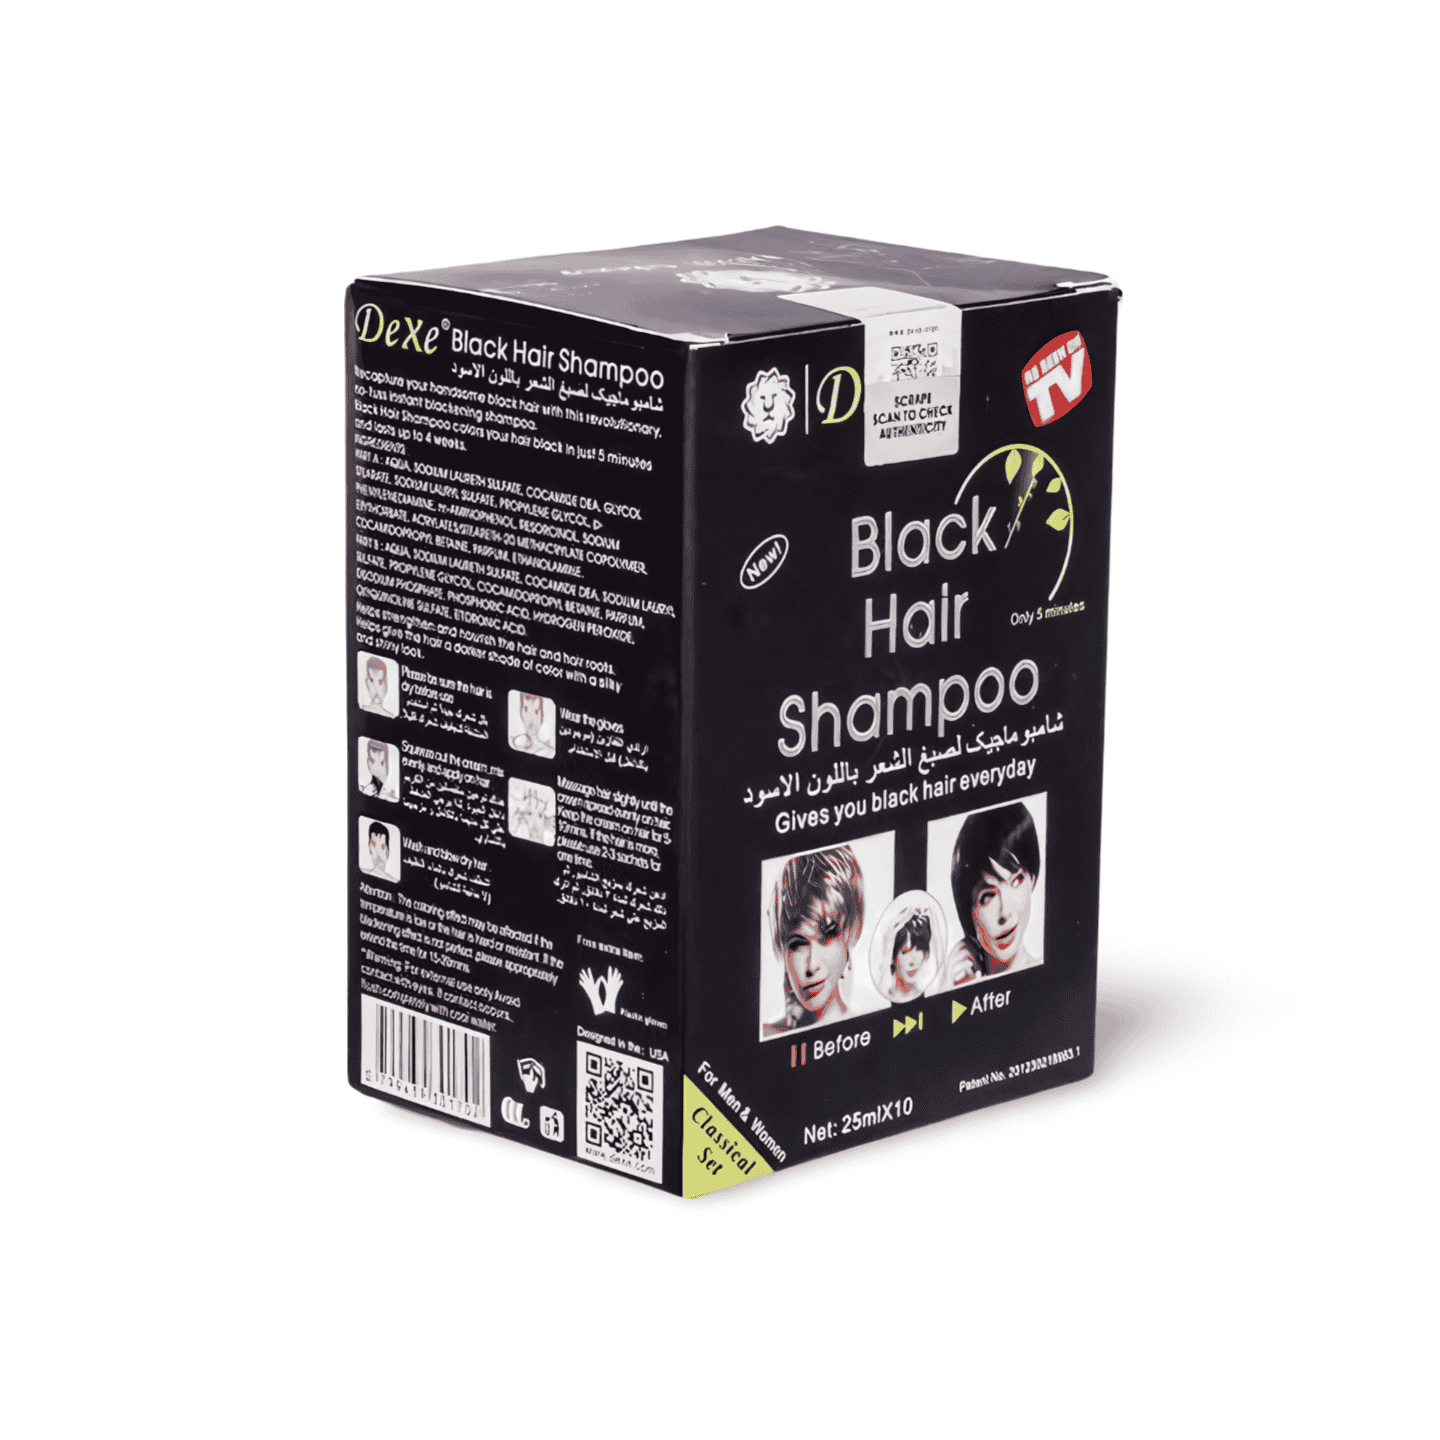 Black Hair Shampoo-Dexe Black Hair Shampoo For Natural Hair, Temporary Instant Hair Dye Maintain For Men And Women